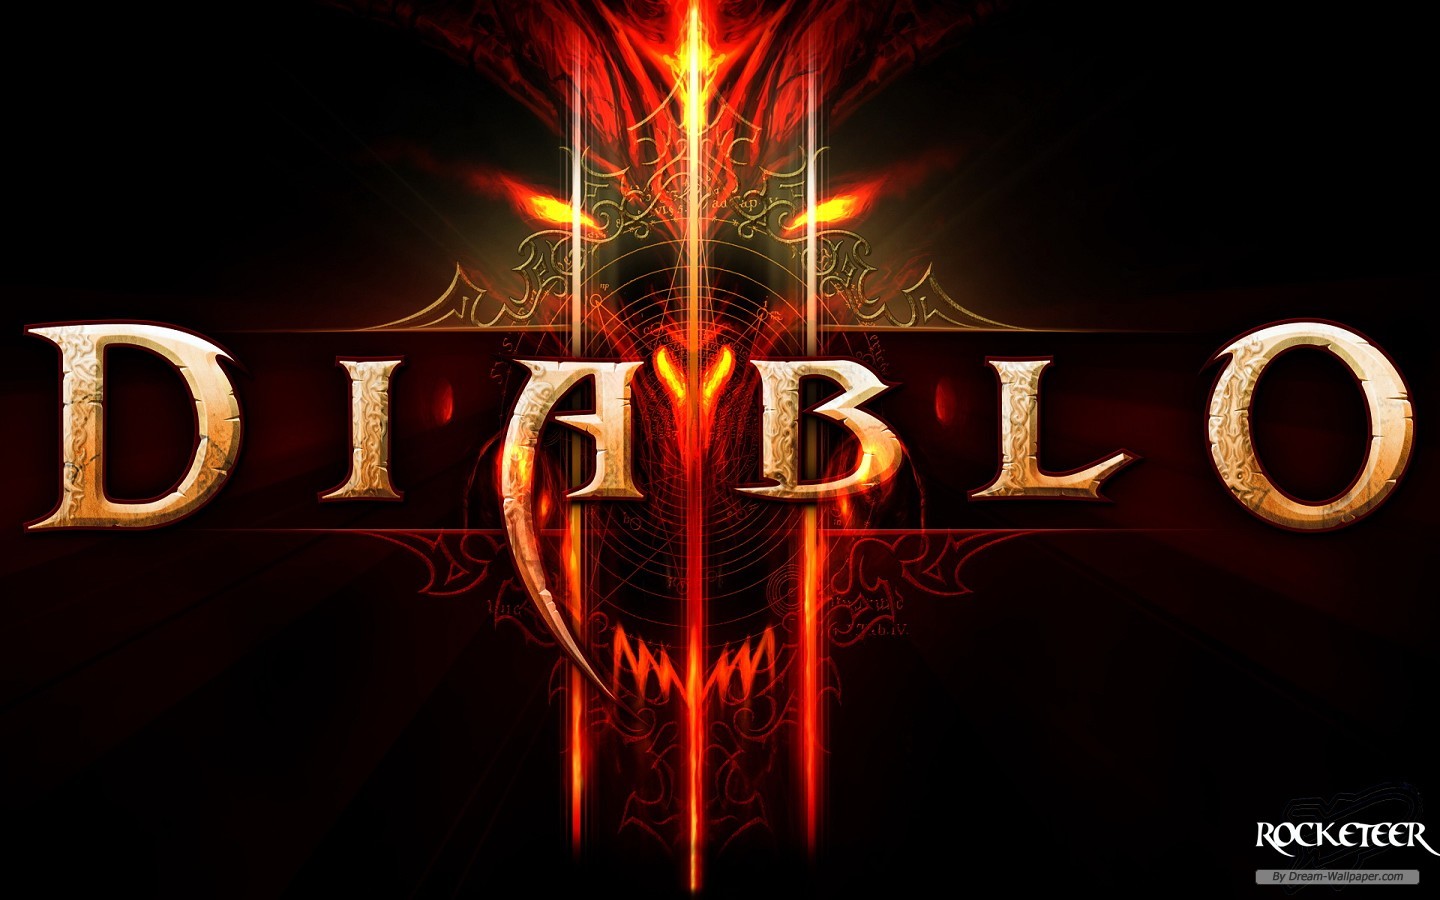 Diablo 4 free downloads